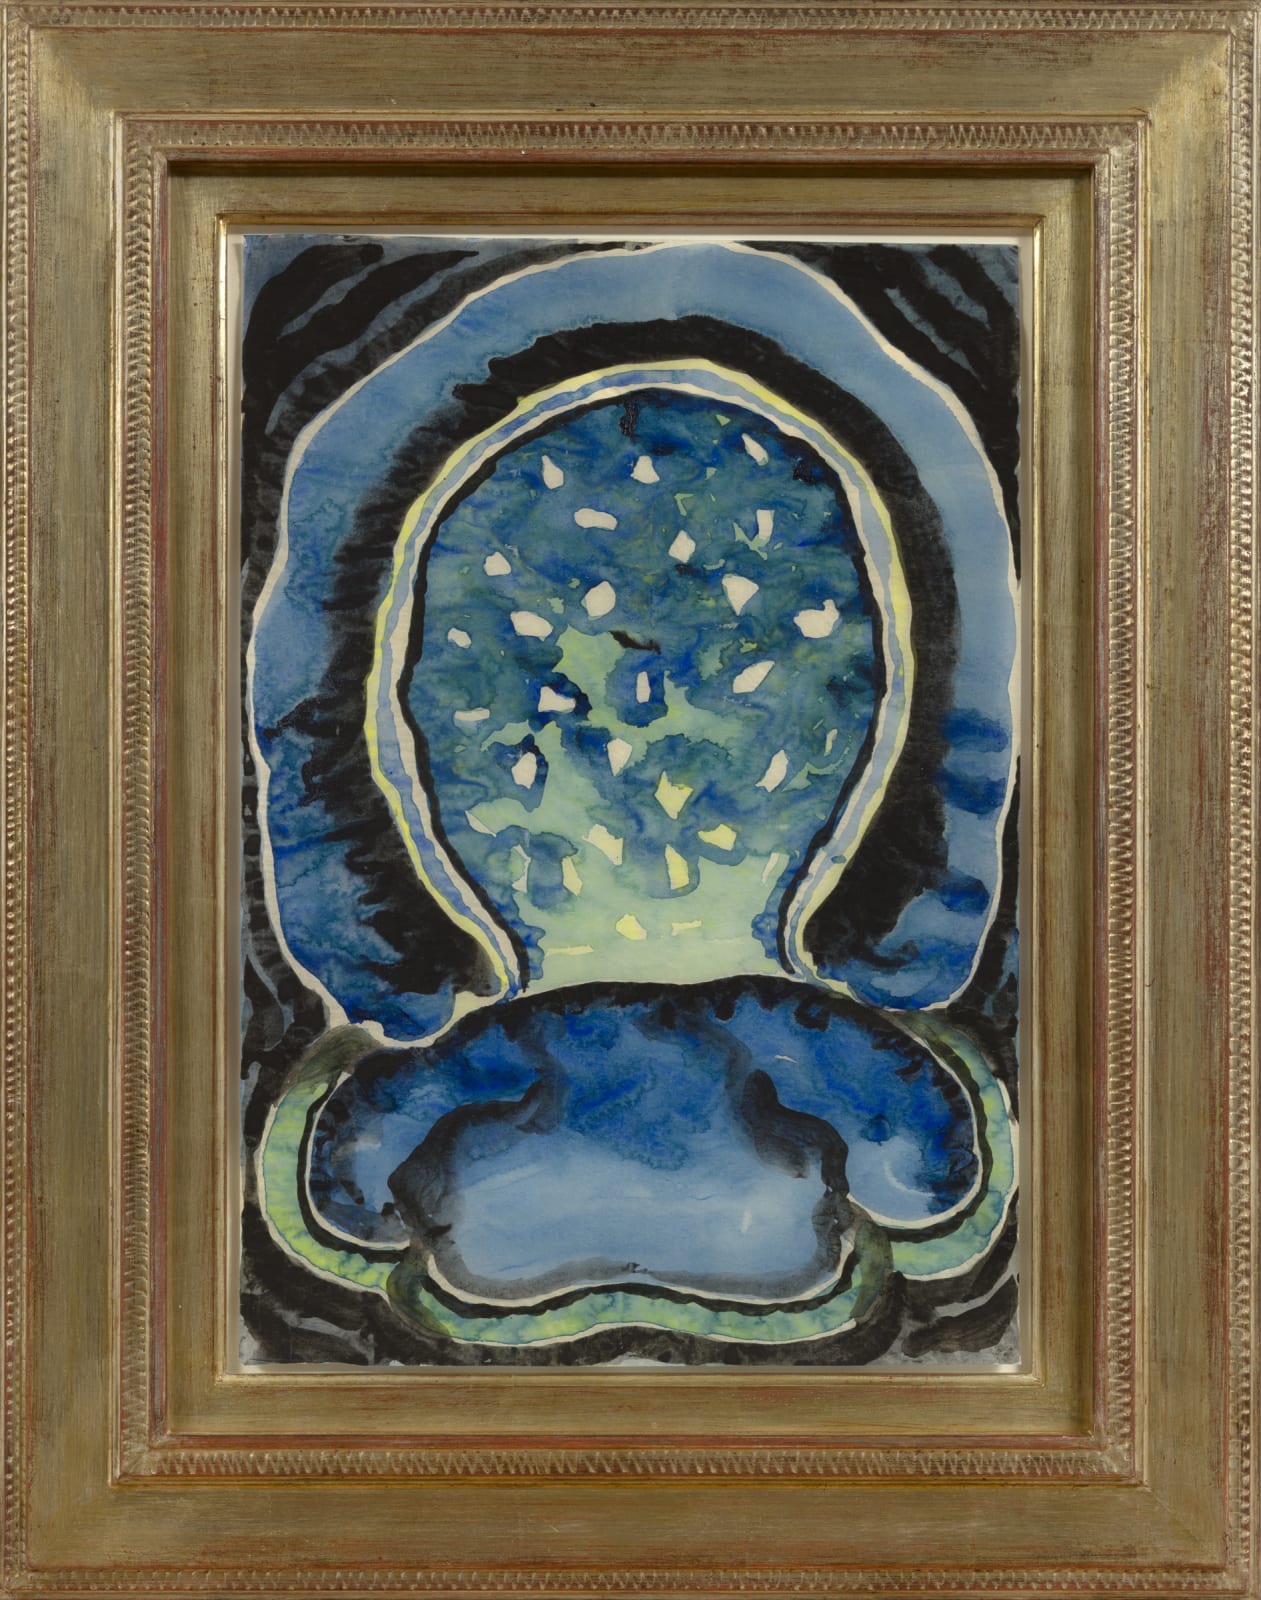 Georgia O'Keeffe, Abstraction, 1917